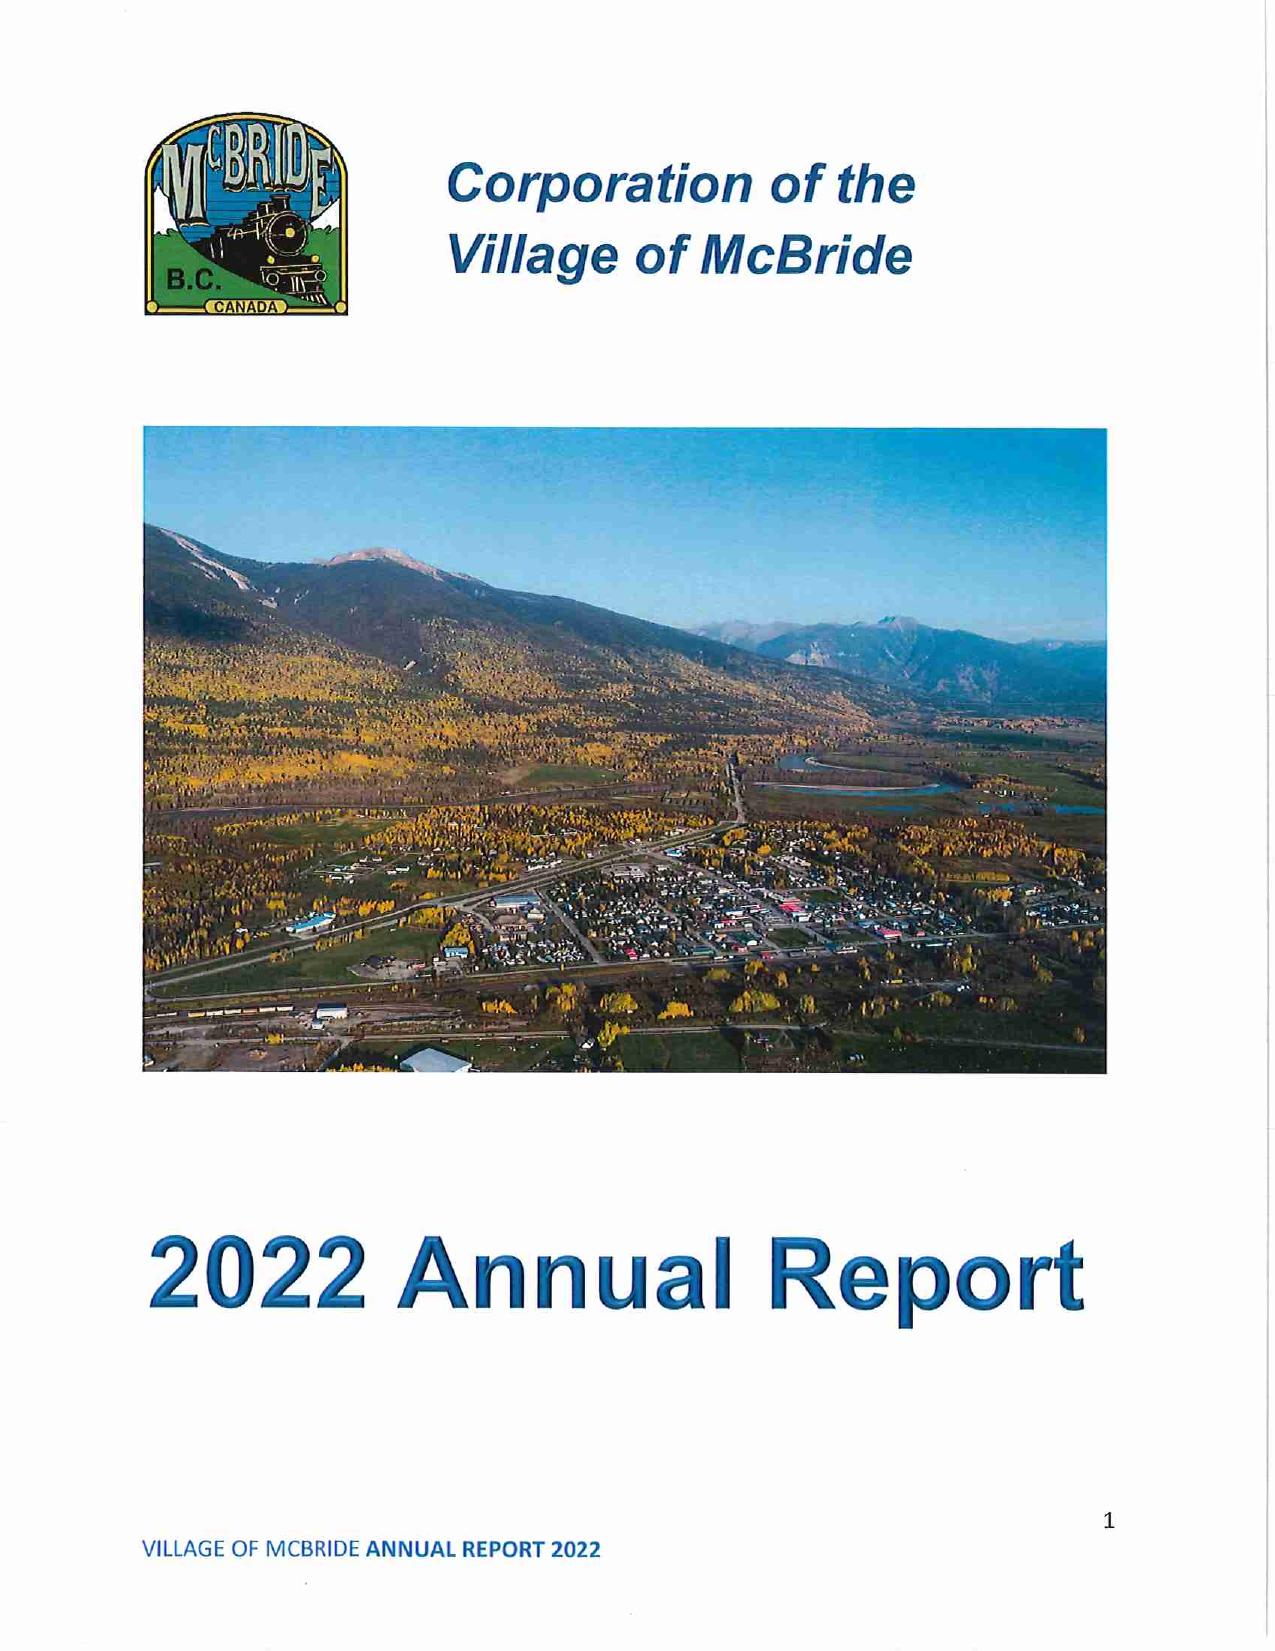 MCBRIDE 2022 Annual Report